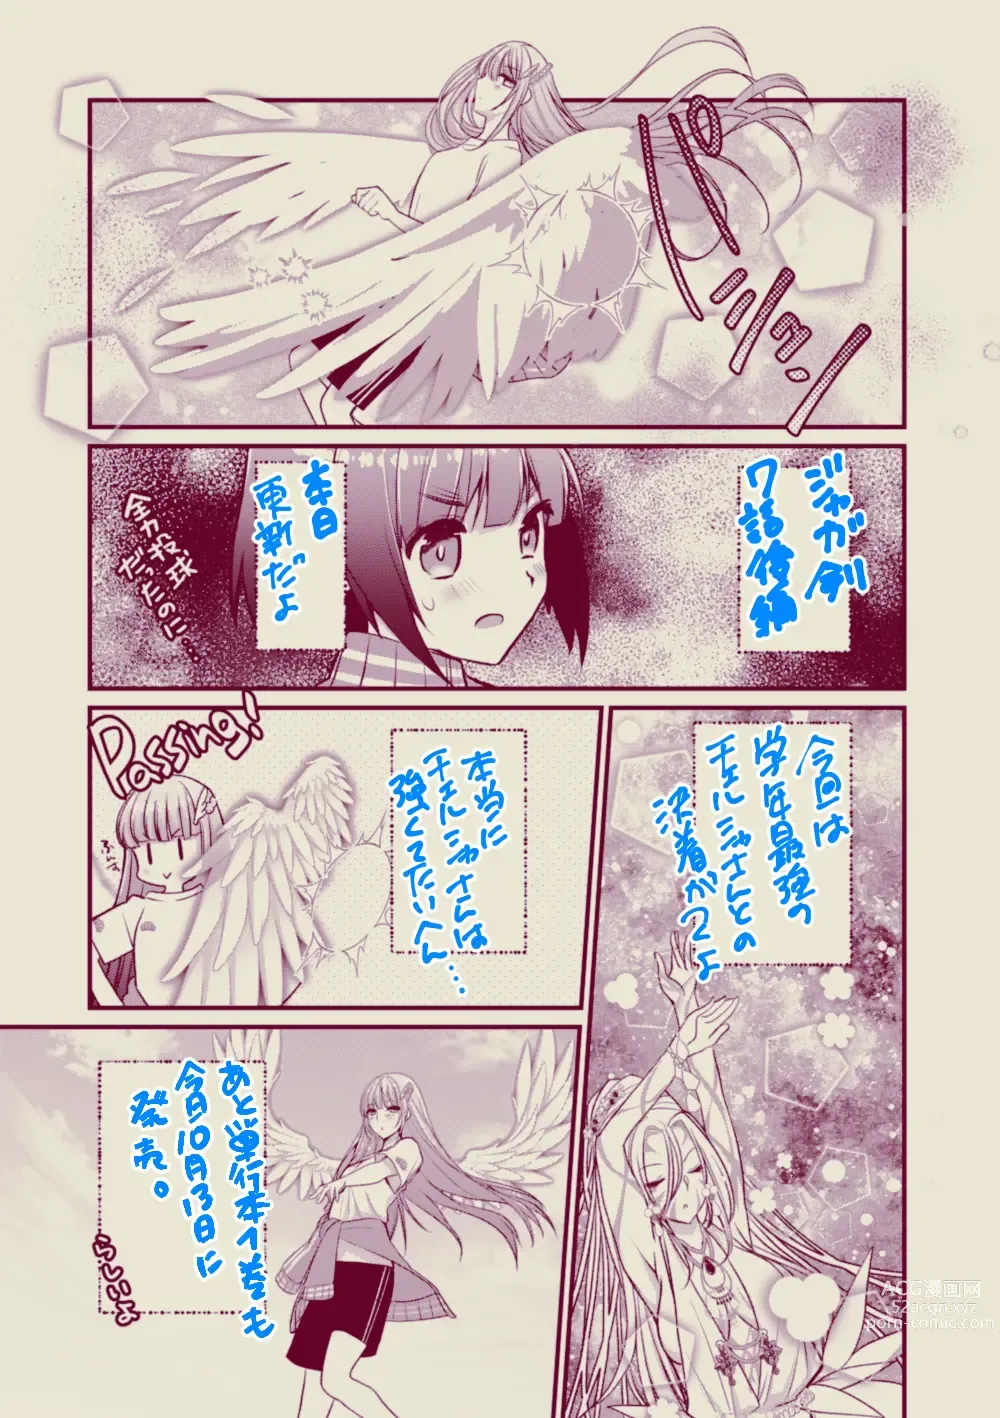 Page 1020 of imageset ●PIXIV● たぢまよしかづ